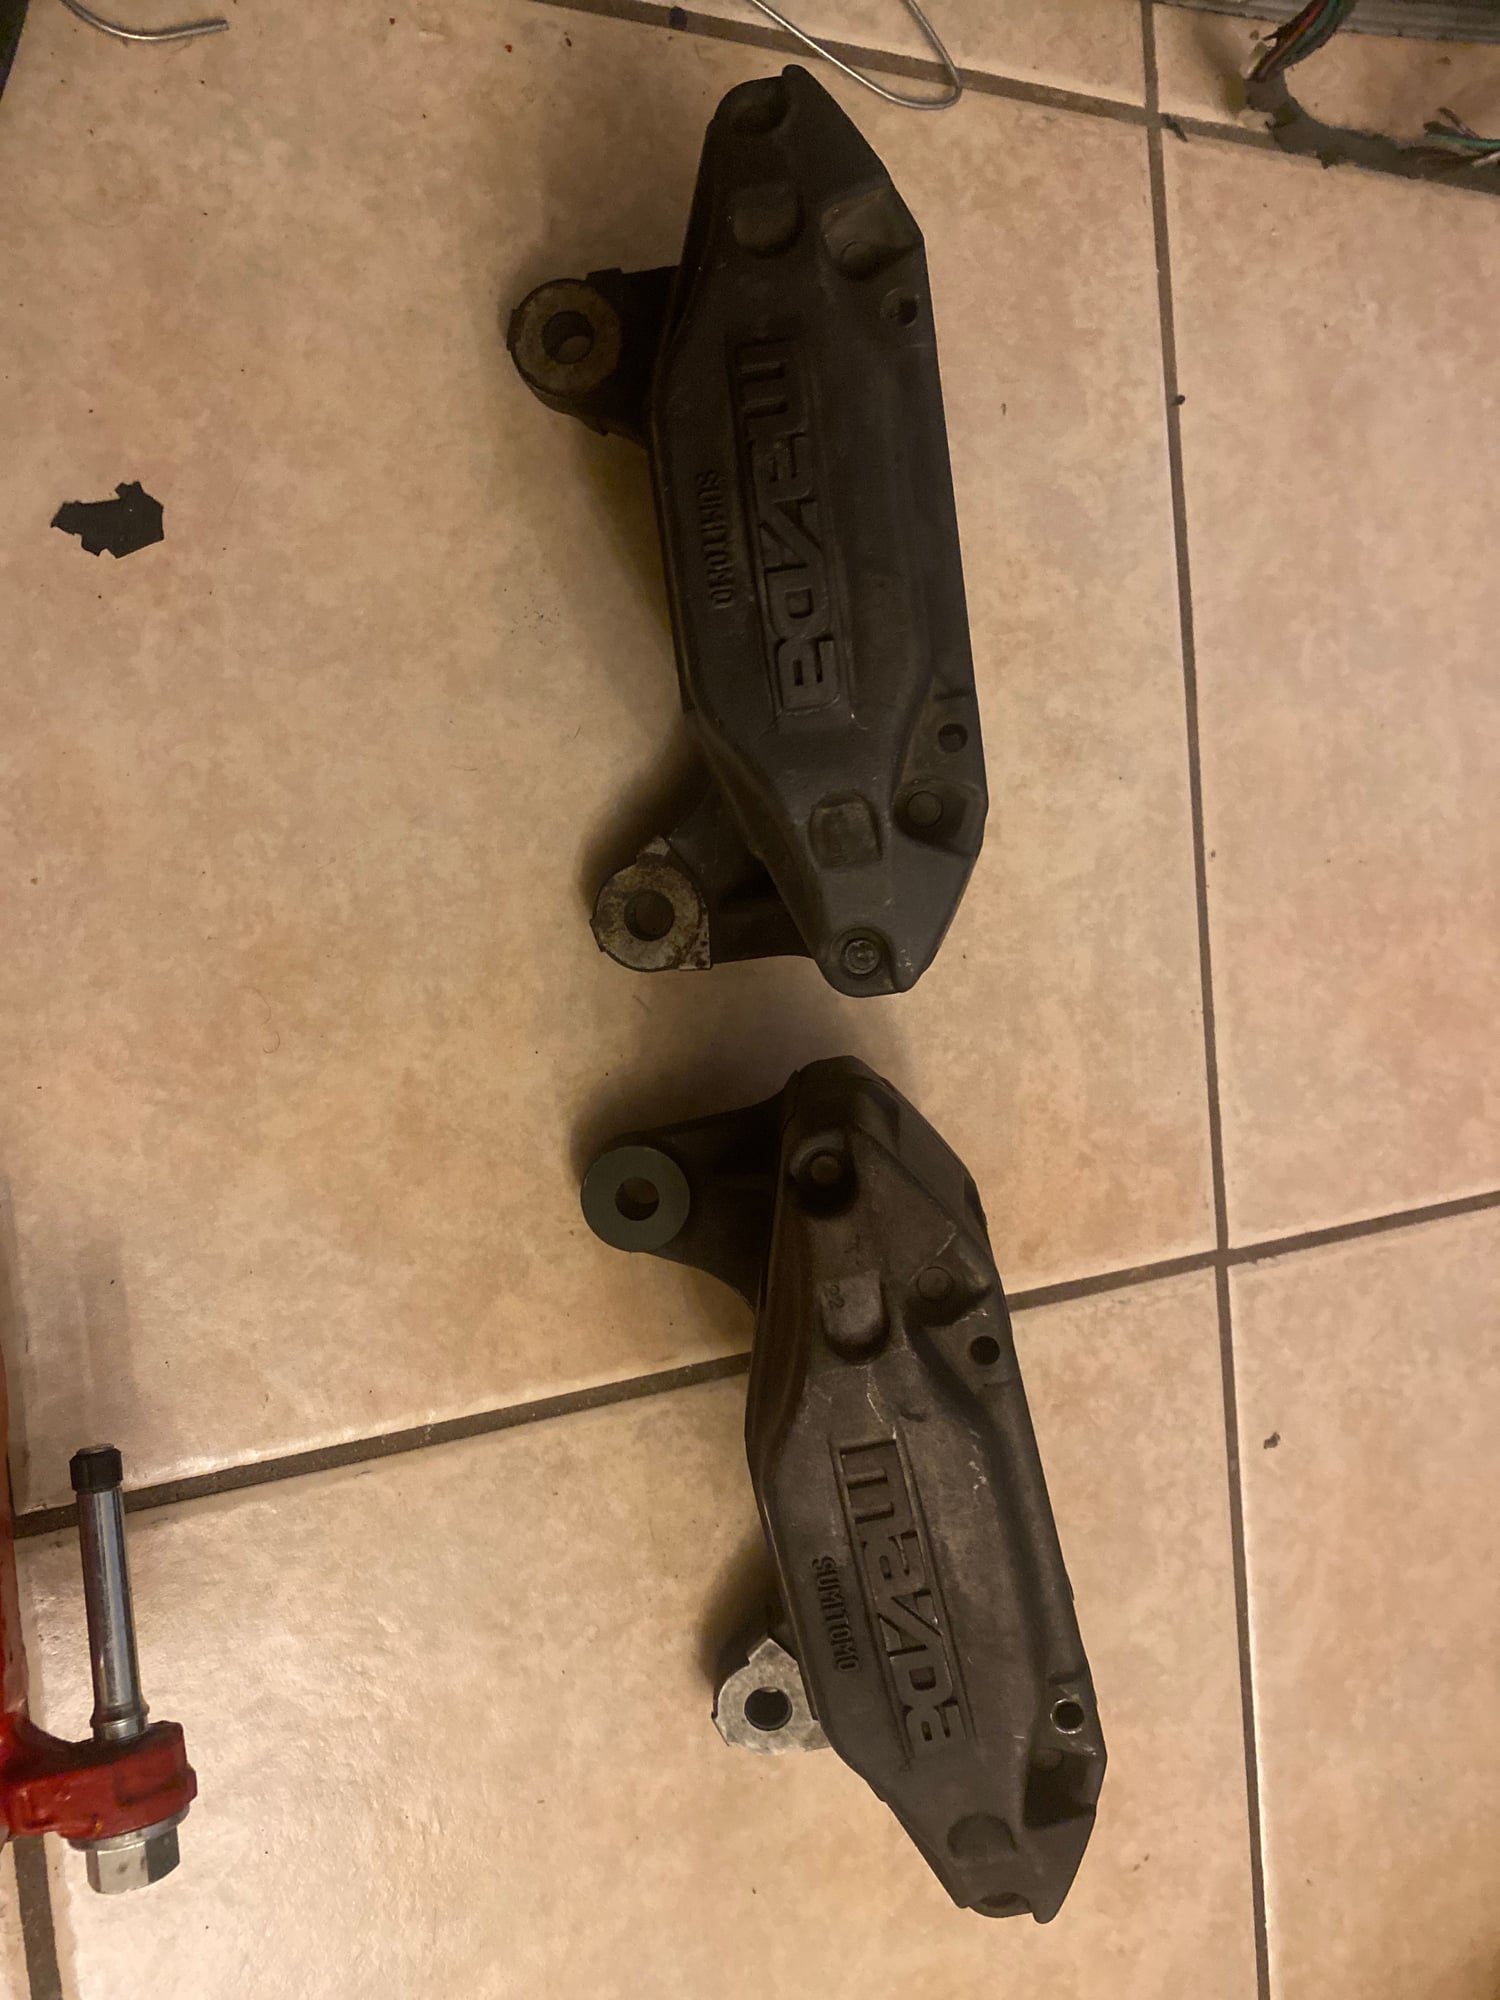 Brakes - Fd rx7 brake calipers - Used - 1993 to 2002 Mazda RX-7 - Miami, FL 33173, United States